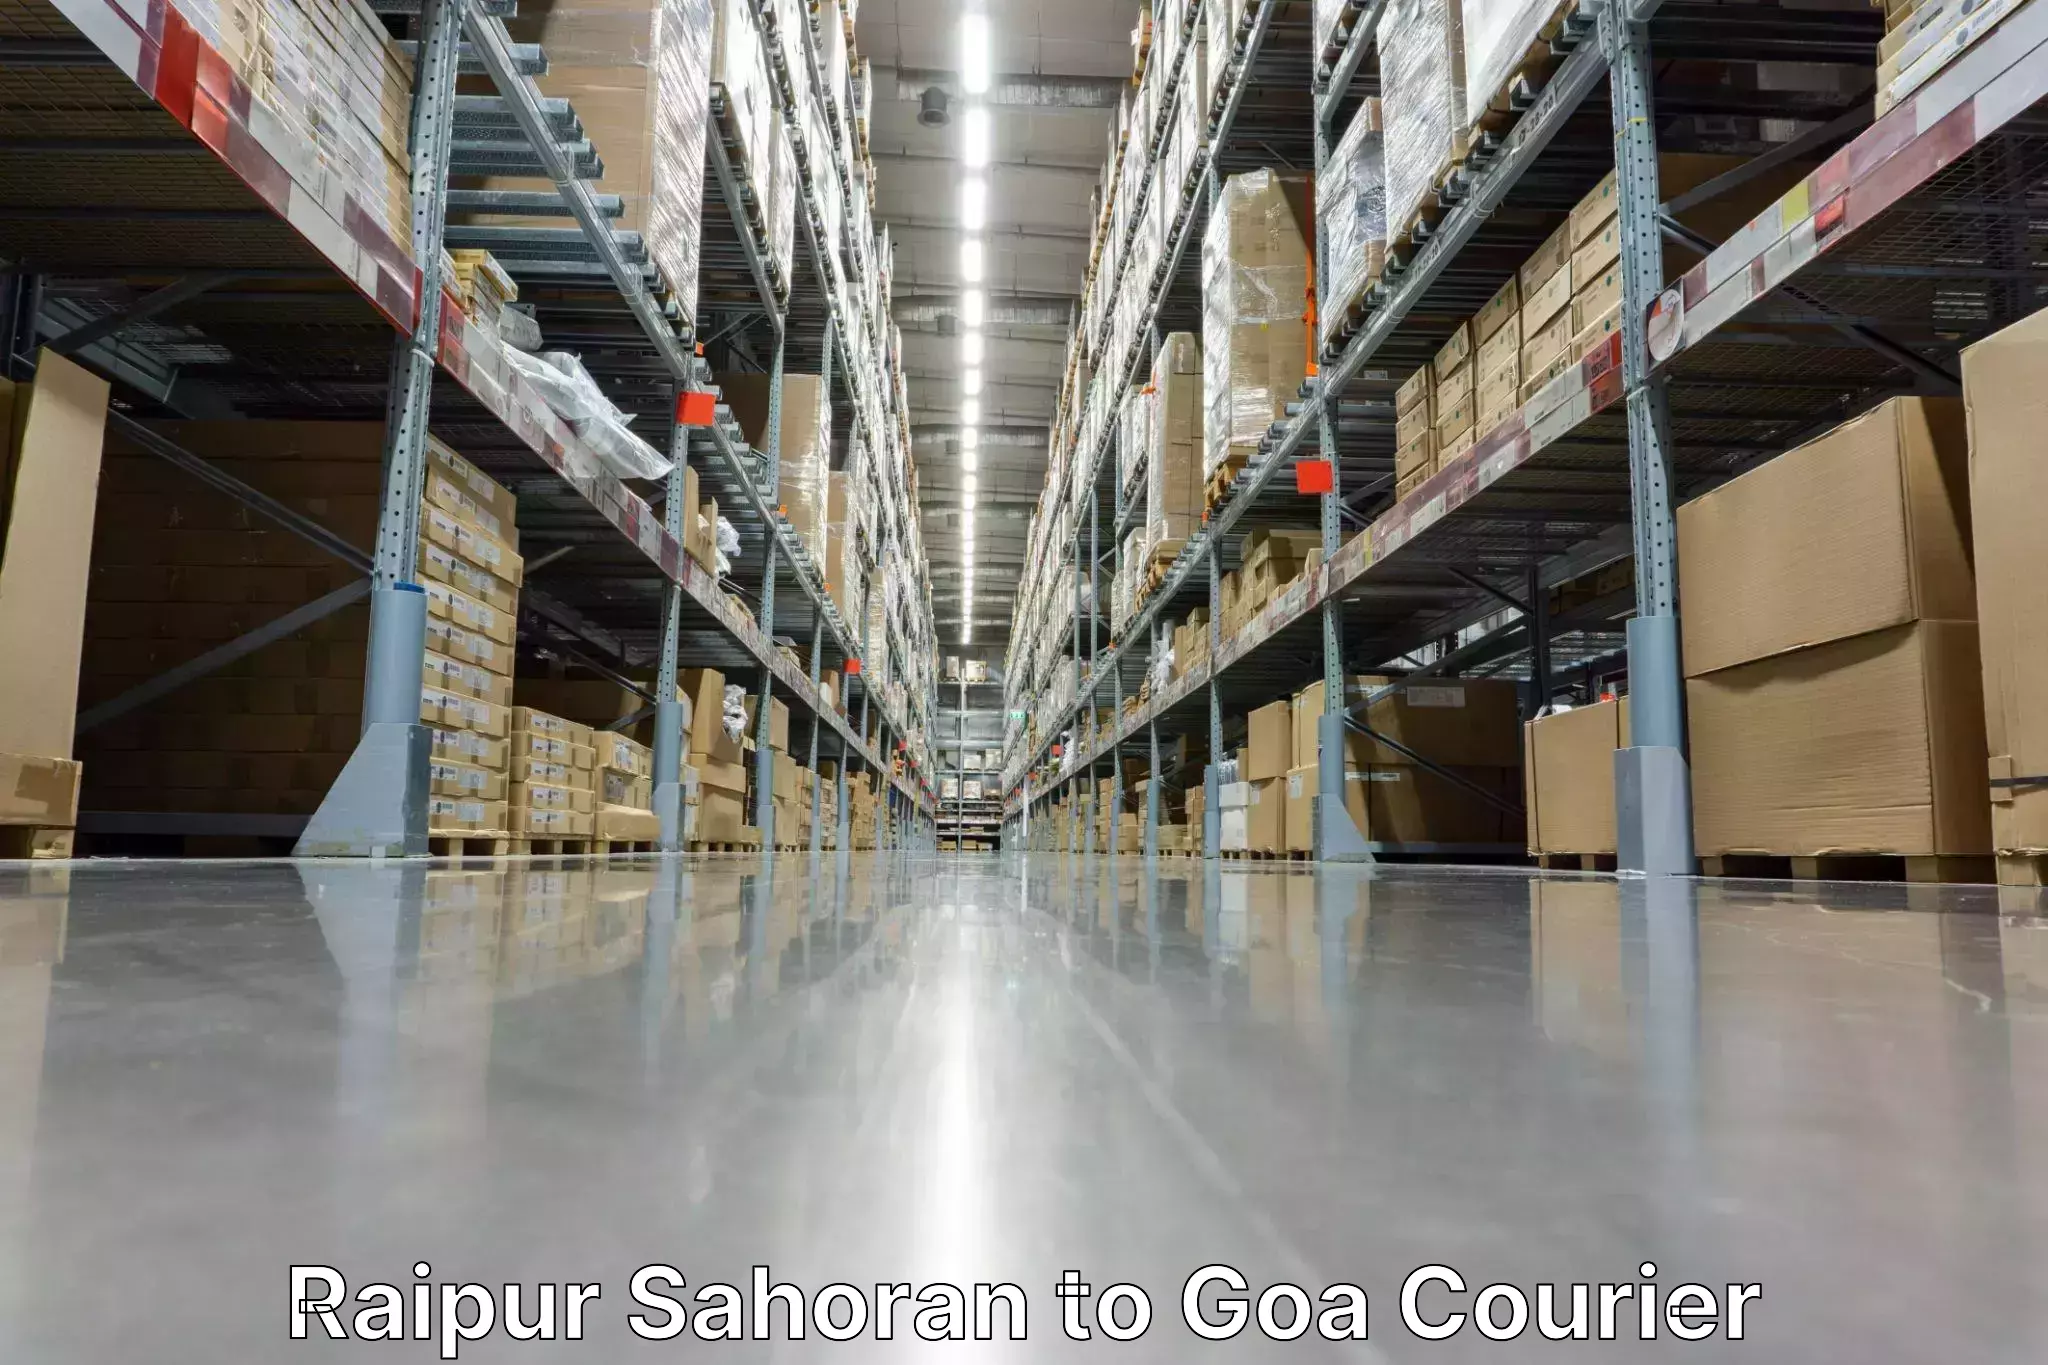 Courier service partnerships Raipur Sahoran to IIT Goa